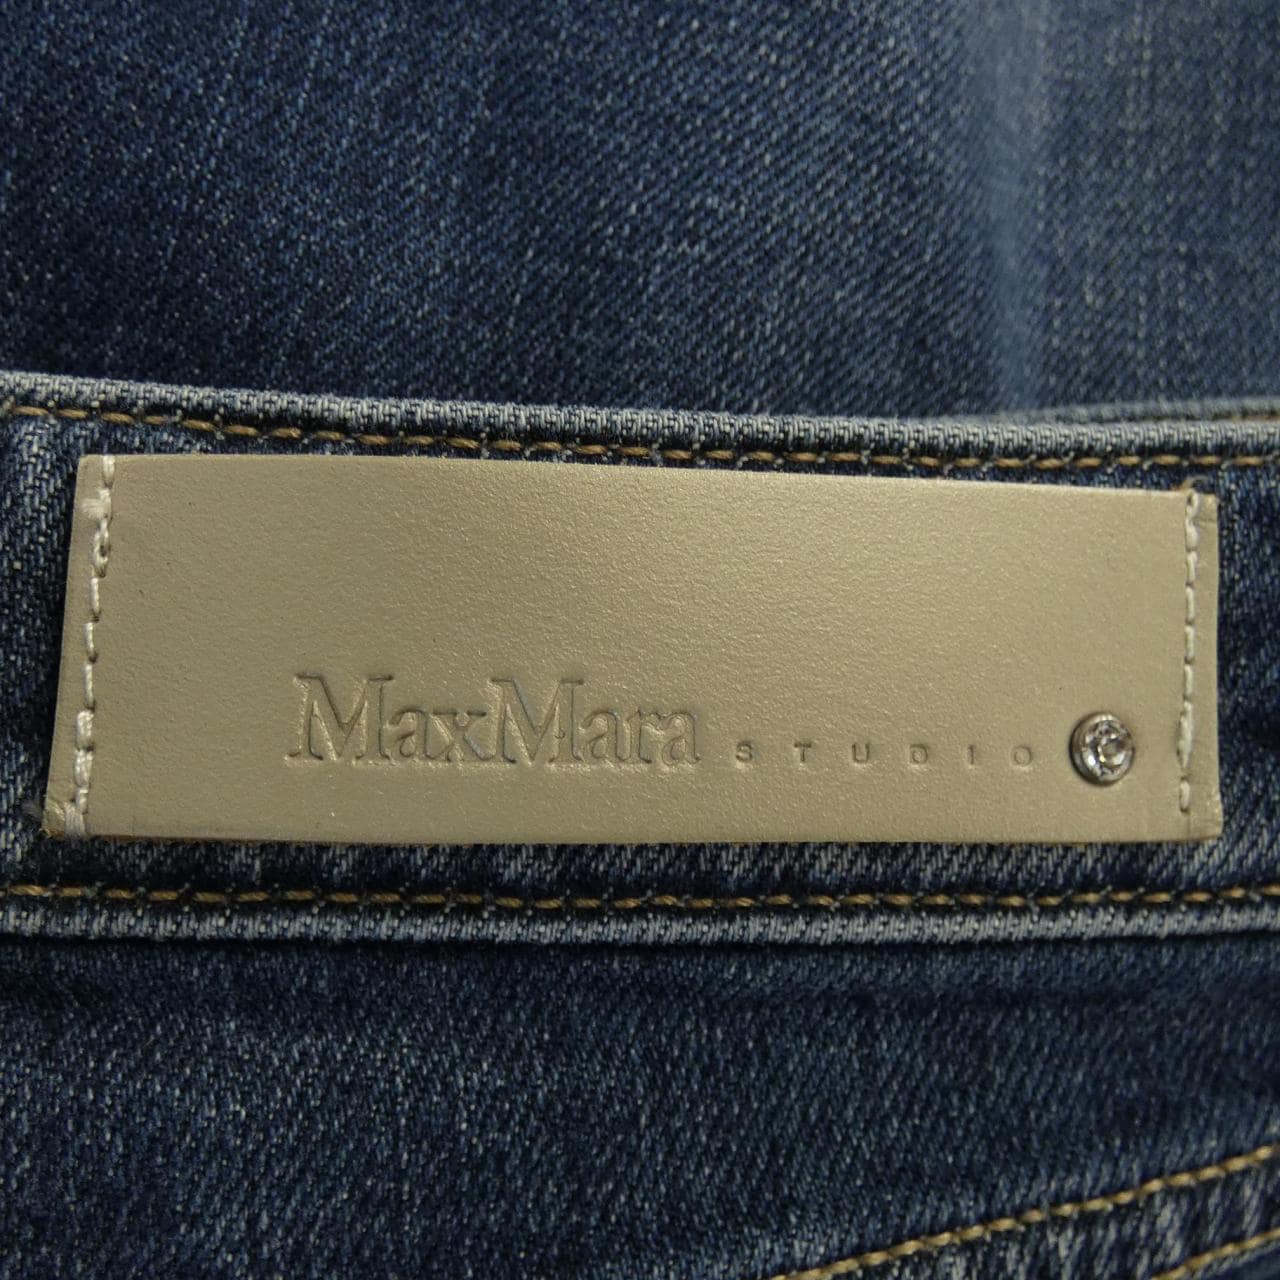 Max Max Mara STUDIO STUDIO Jeans